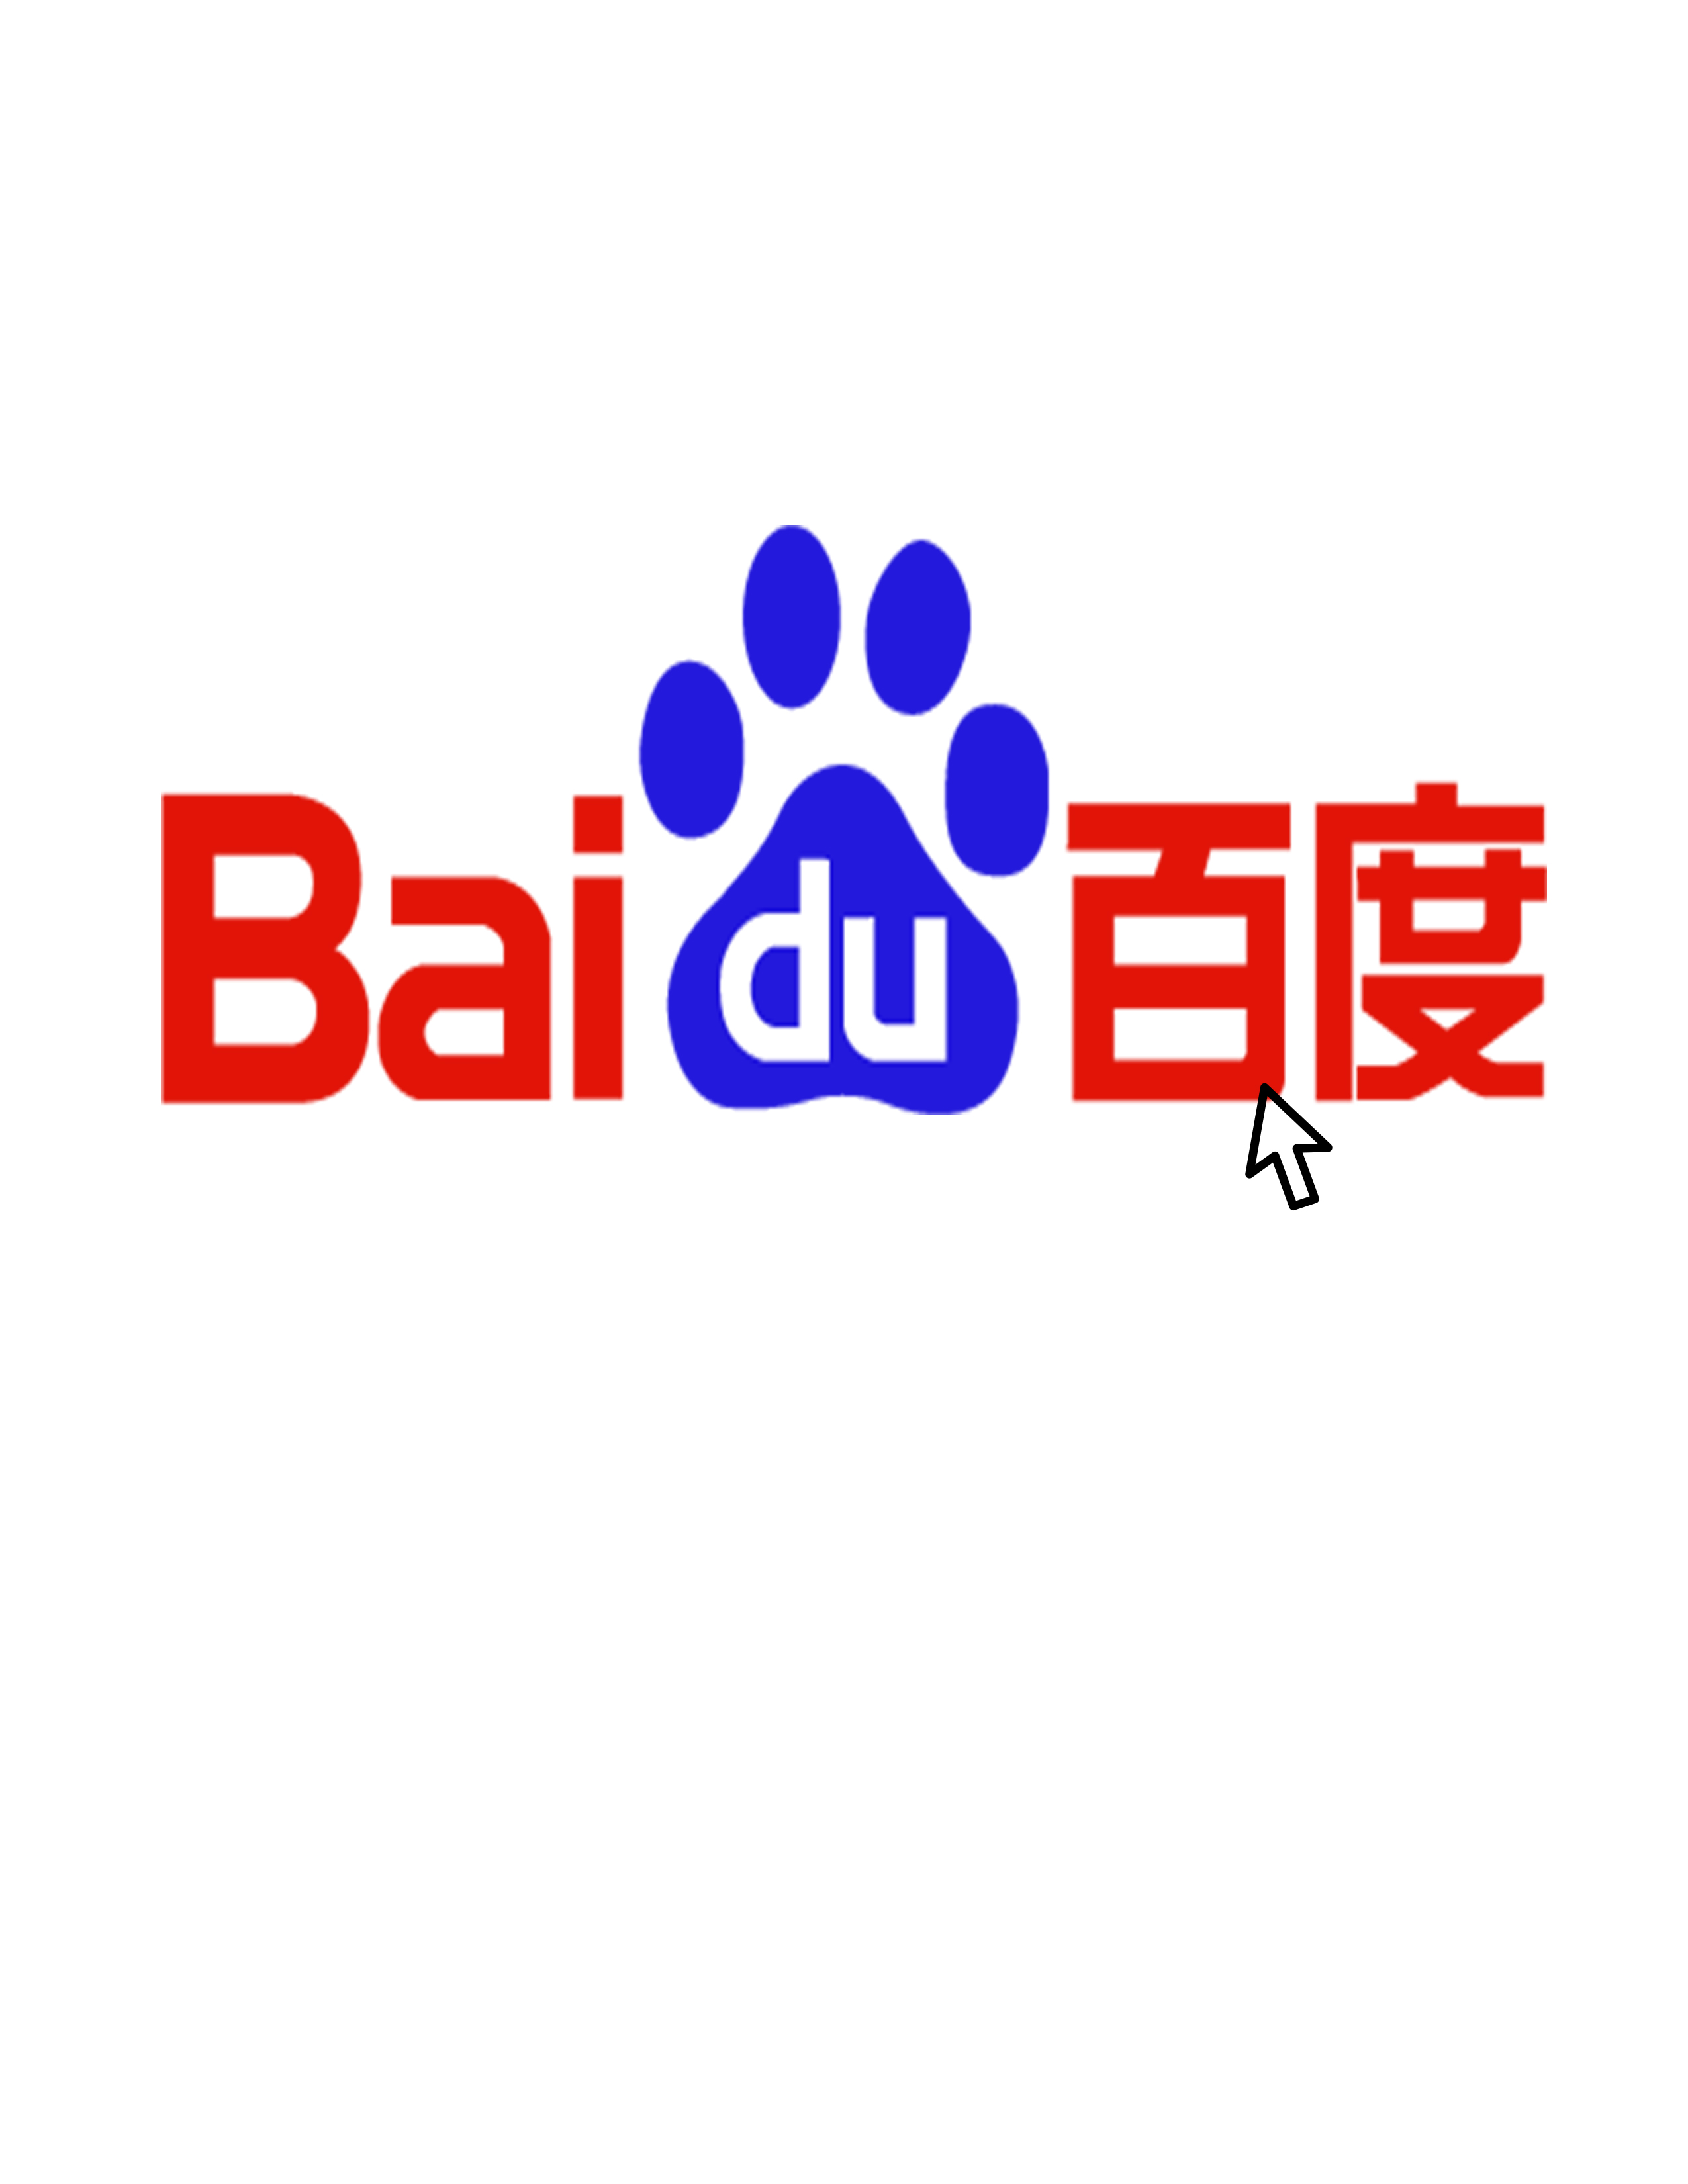 Bai百度应用app图片_图标元素_设计元素-图行天下素材网